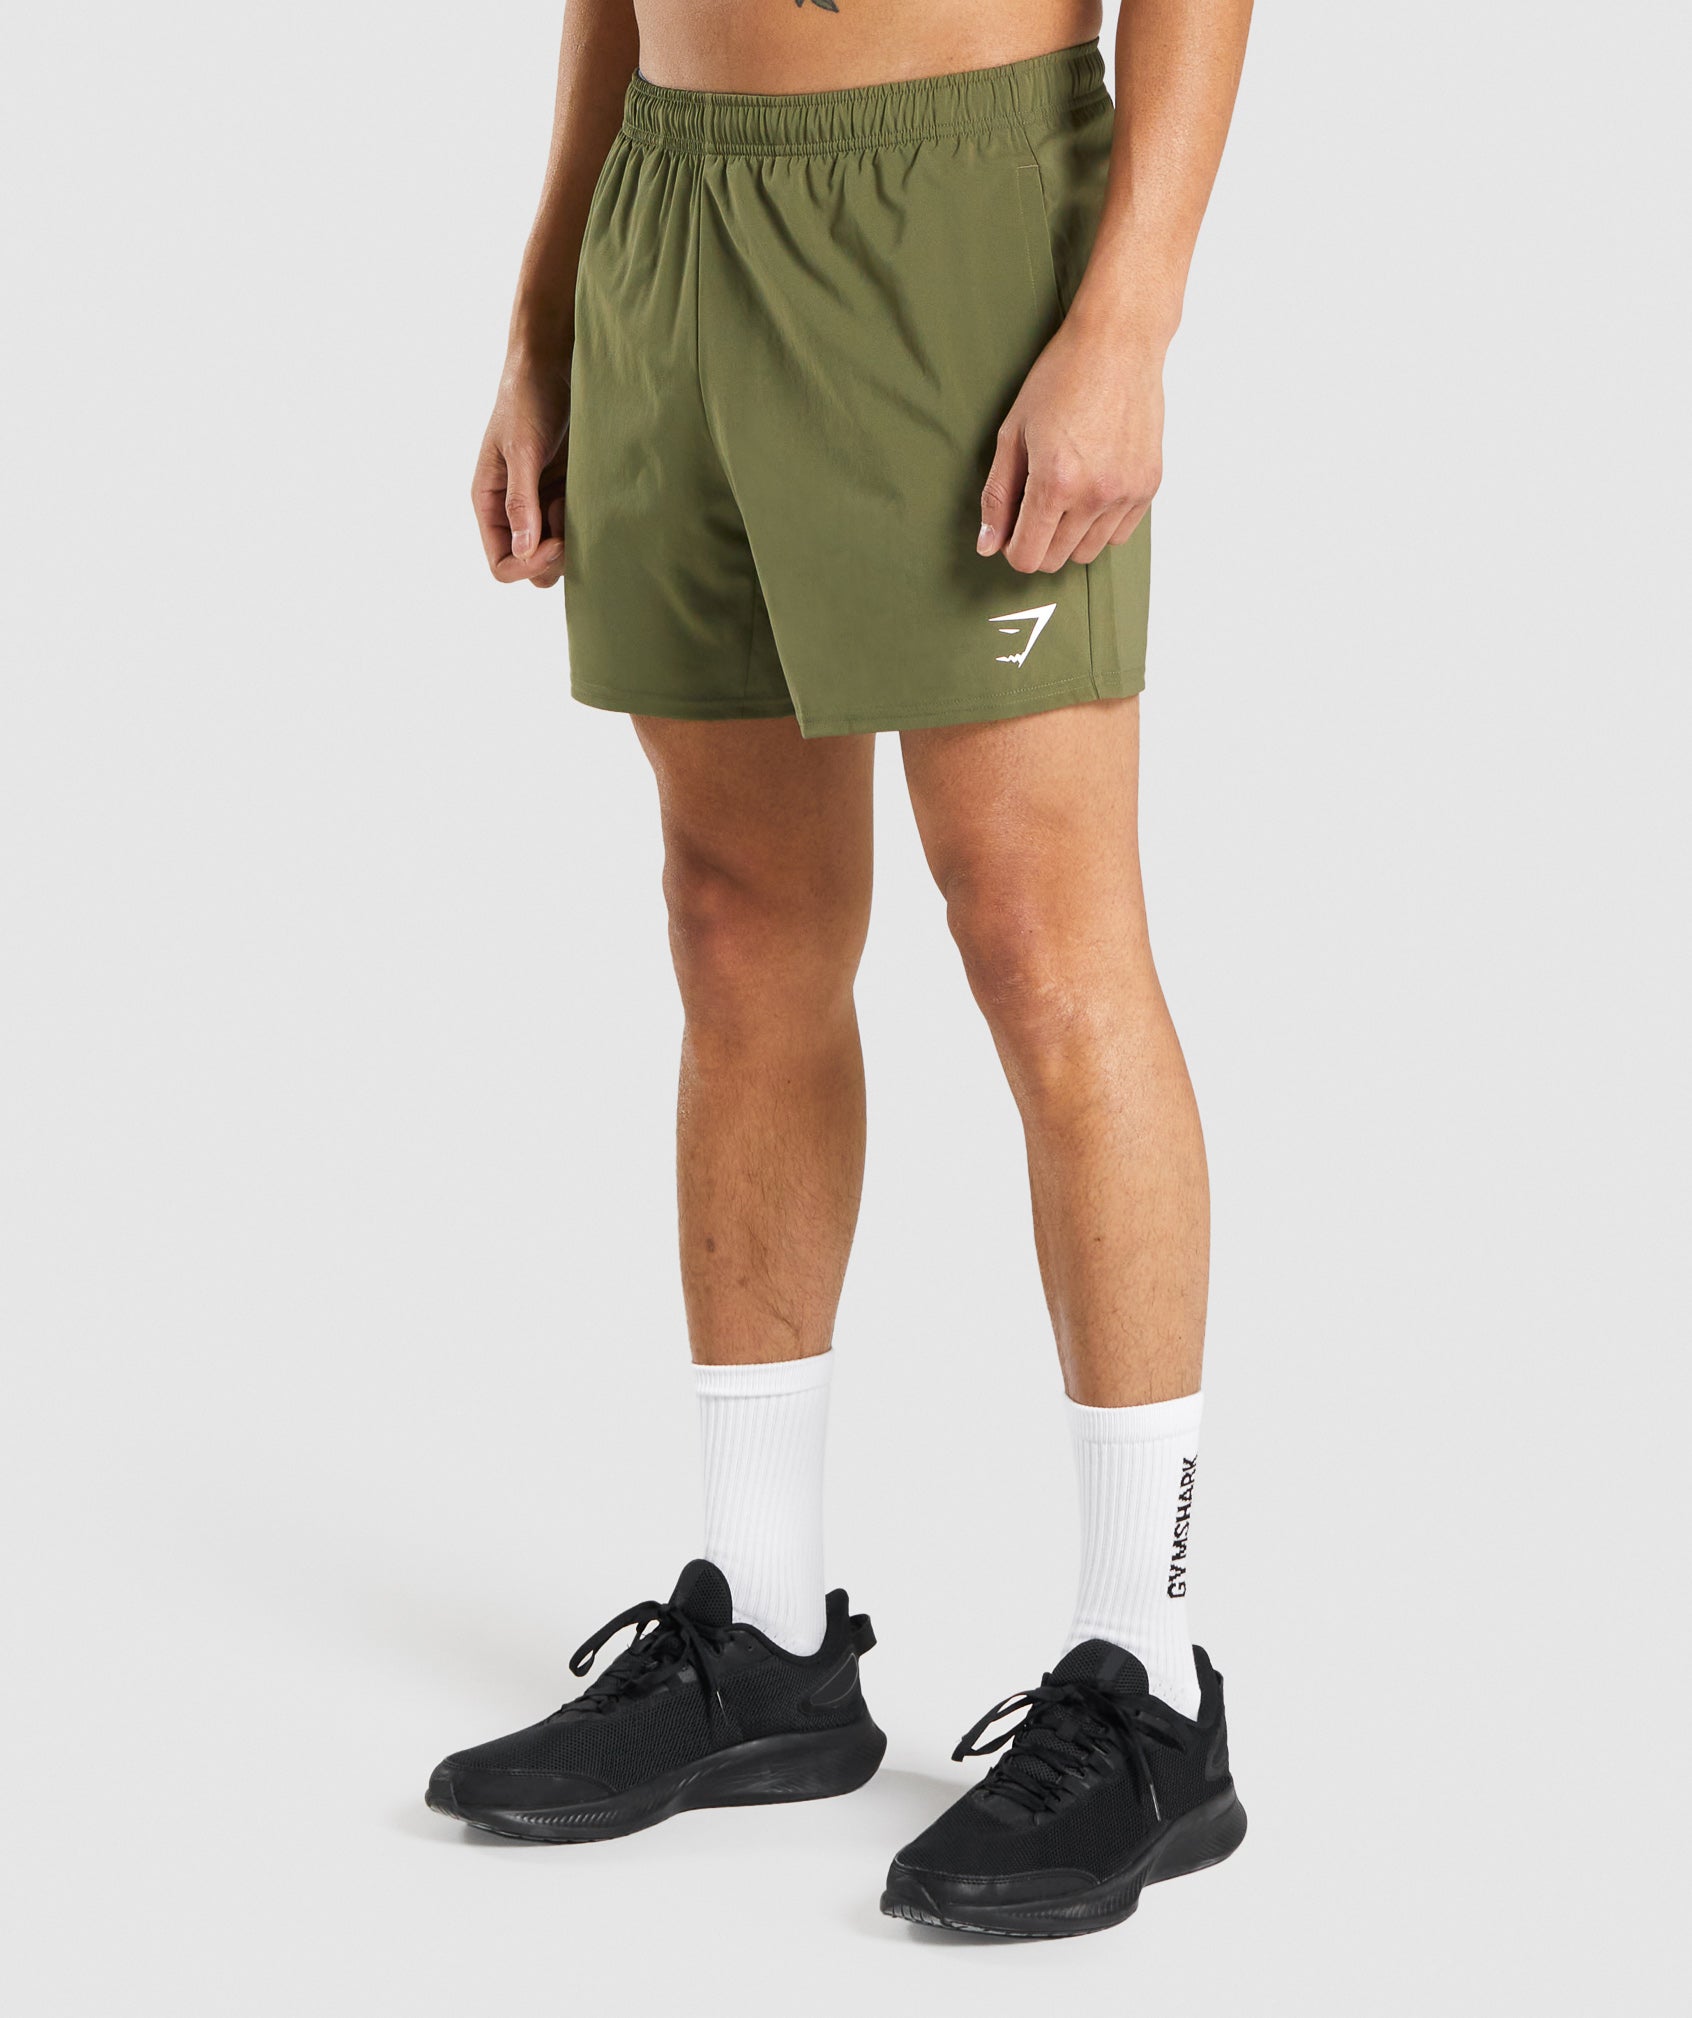 Arrival 5" Shorts in Dark Green